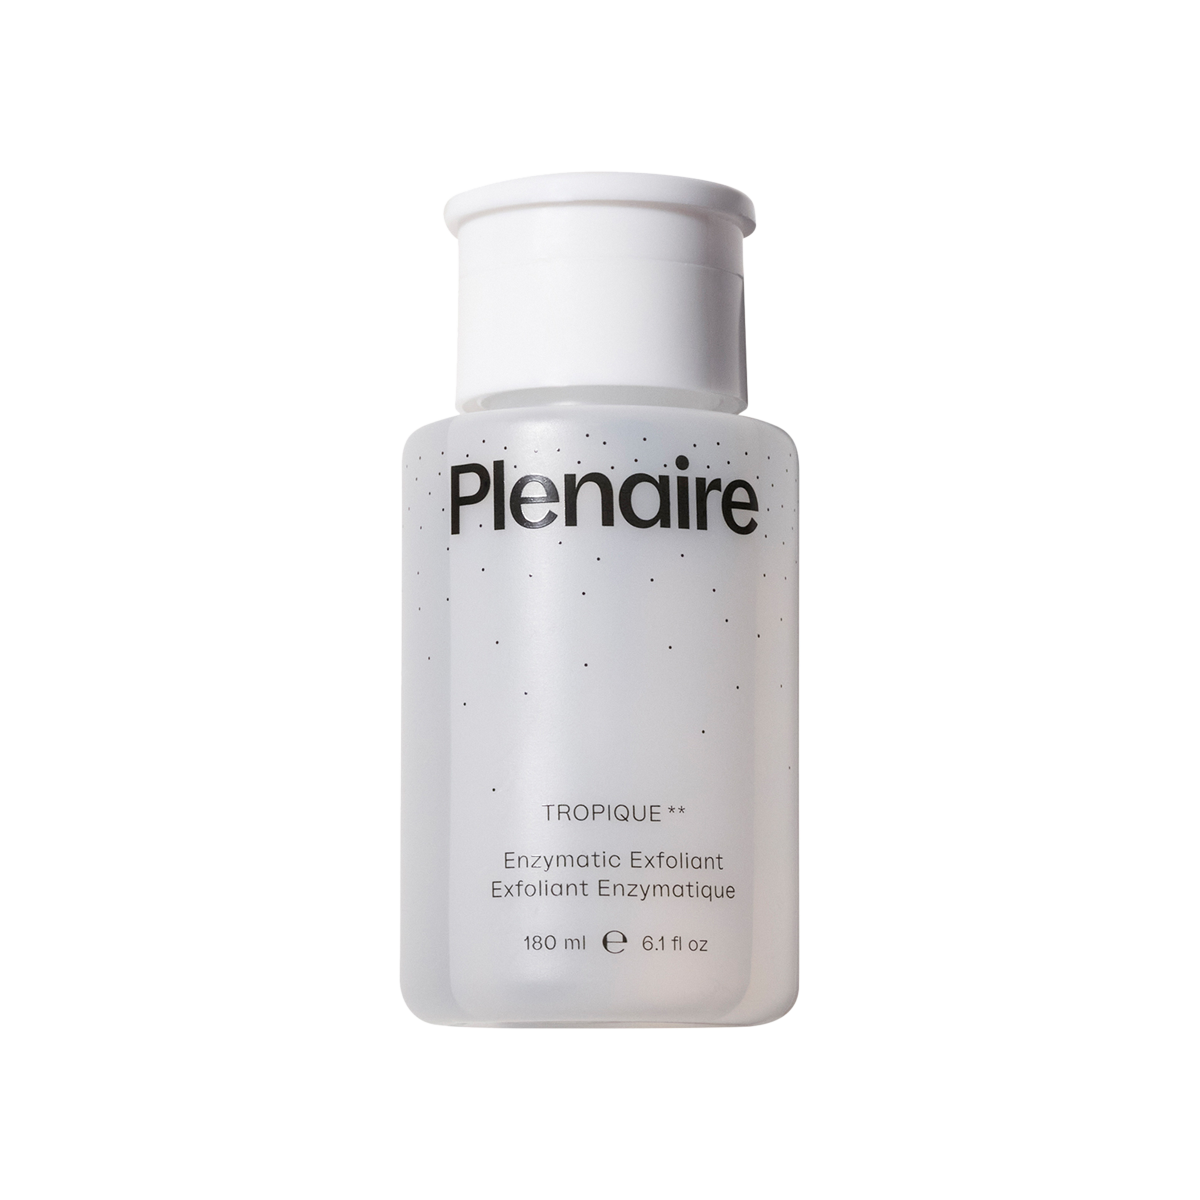 Plenaire - Tropique** Enzymatic Exfoliant